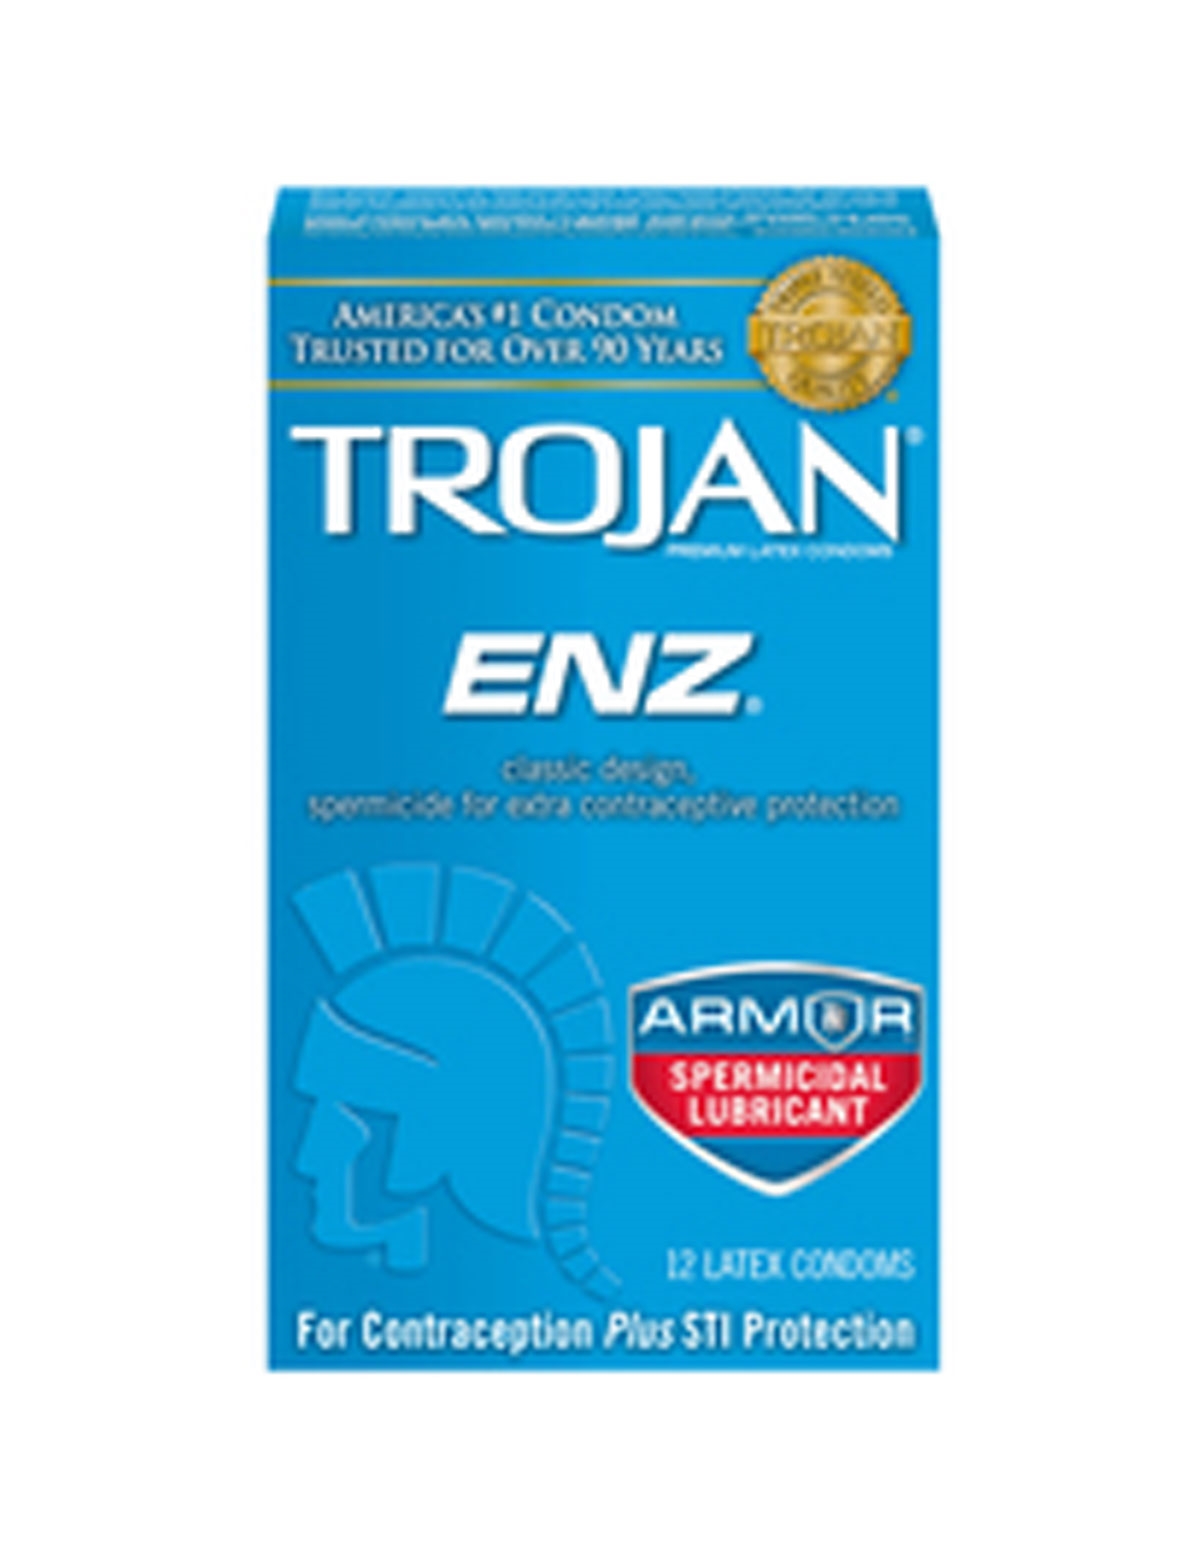 alternate image for Trojan Enz Armor Spermicidal 12 Pack